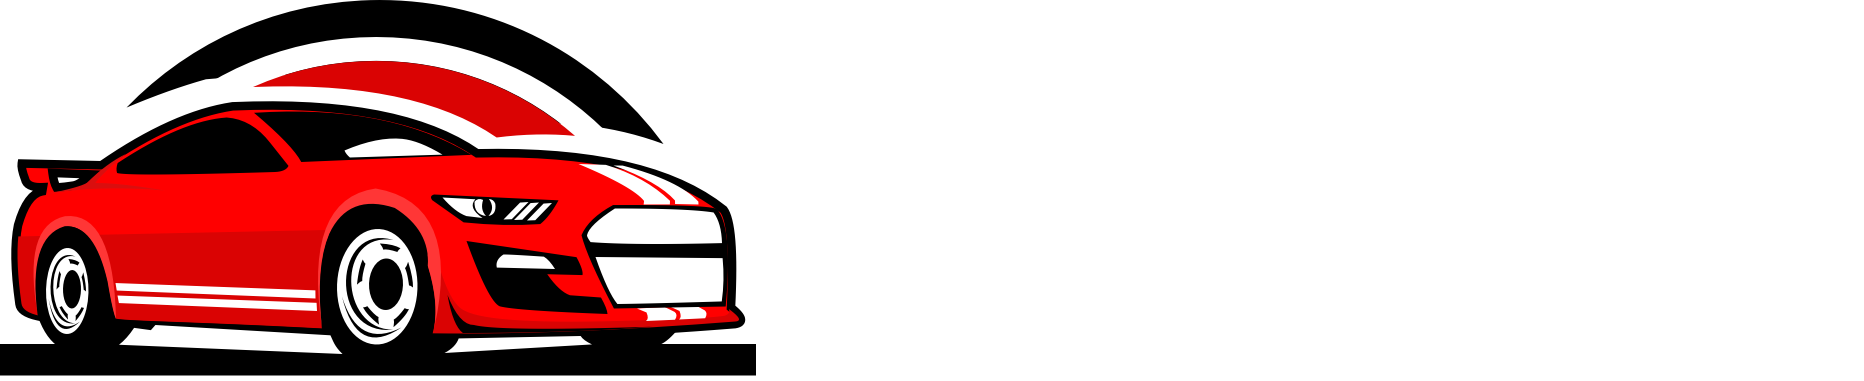 UMI.CY - Logo